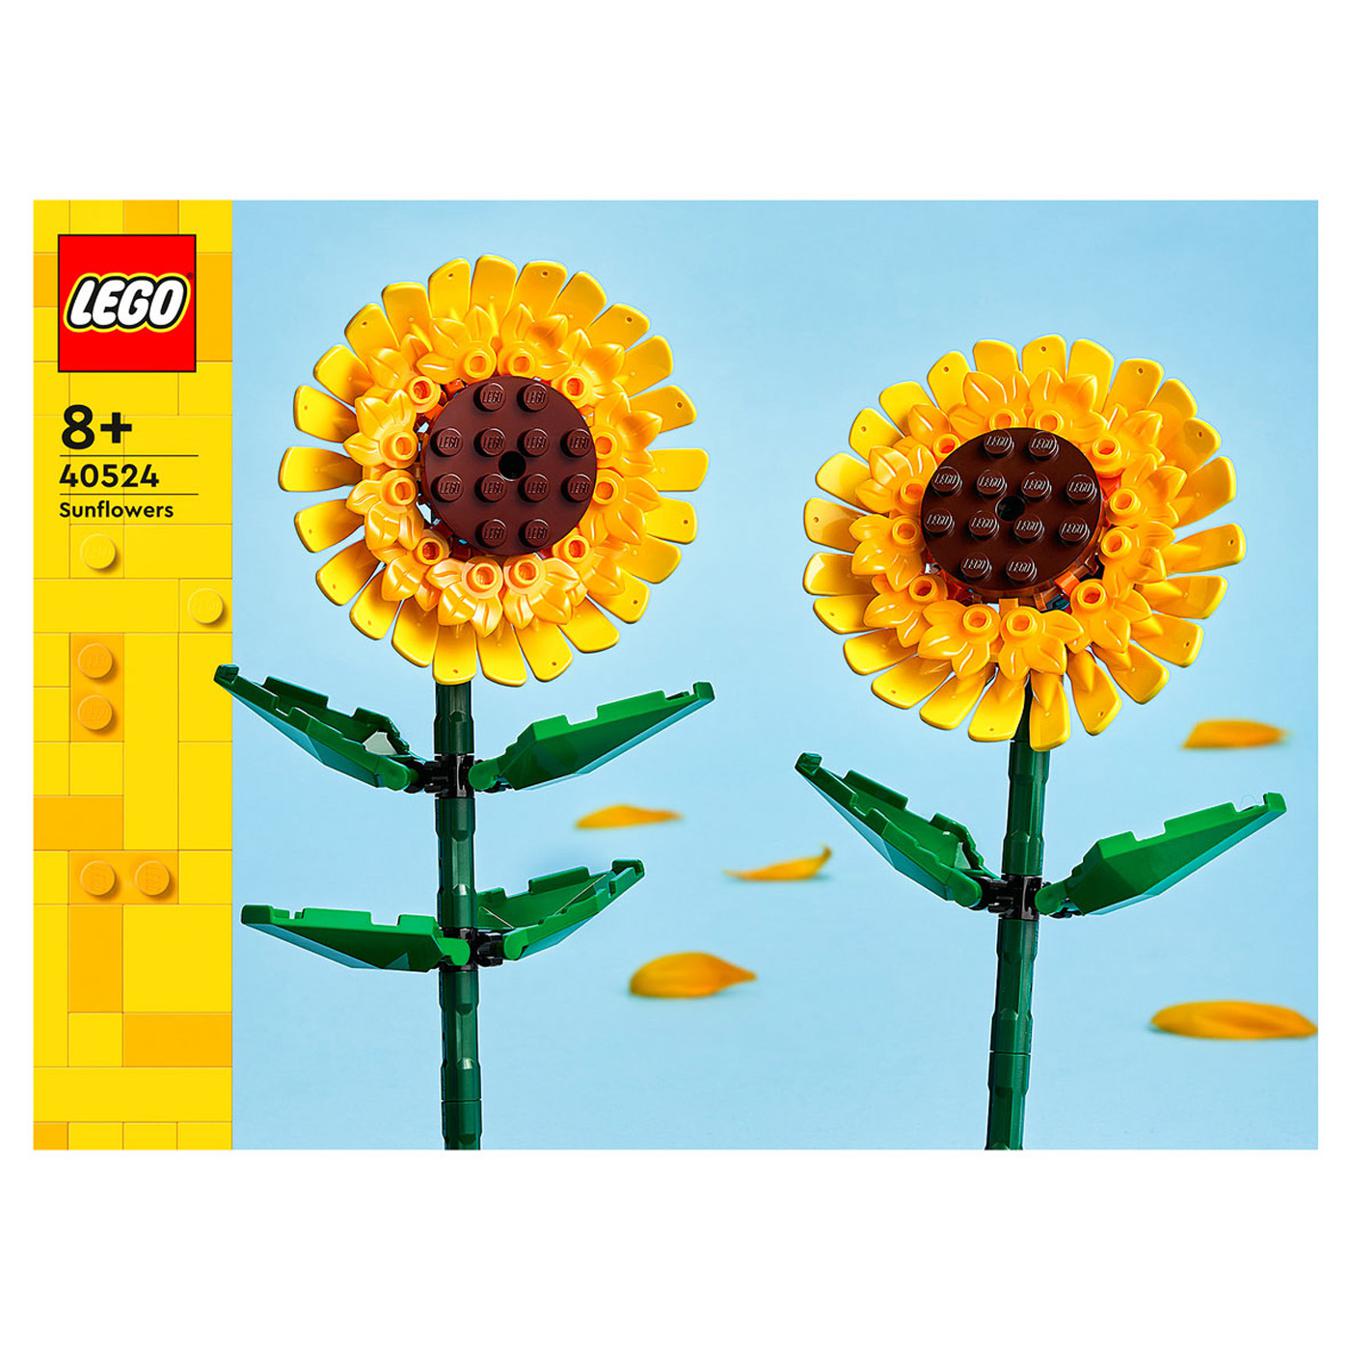 Constructor LEGO 40524 Sunflowers